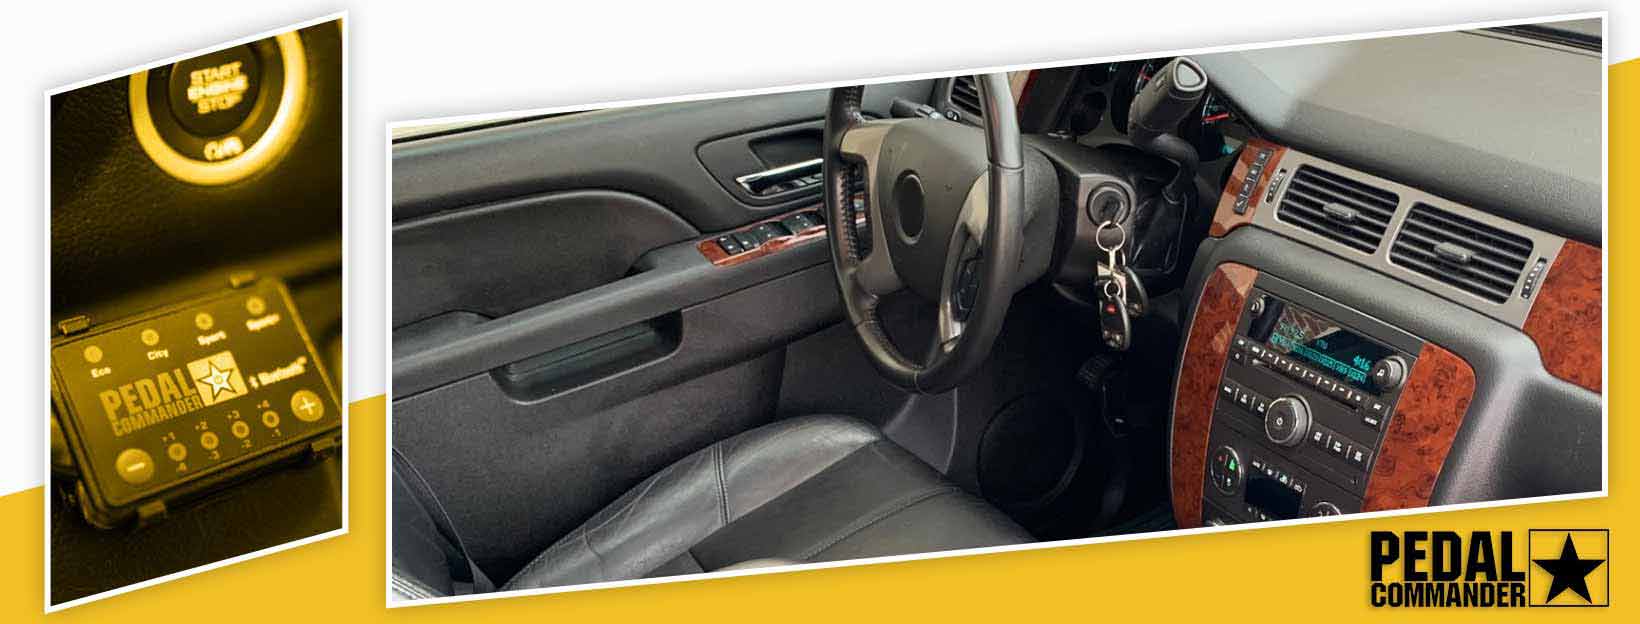 Pedal Commander for Chevrolet Avalanche - interior